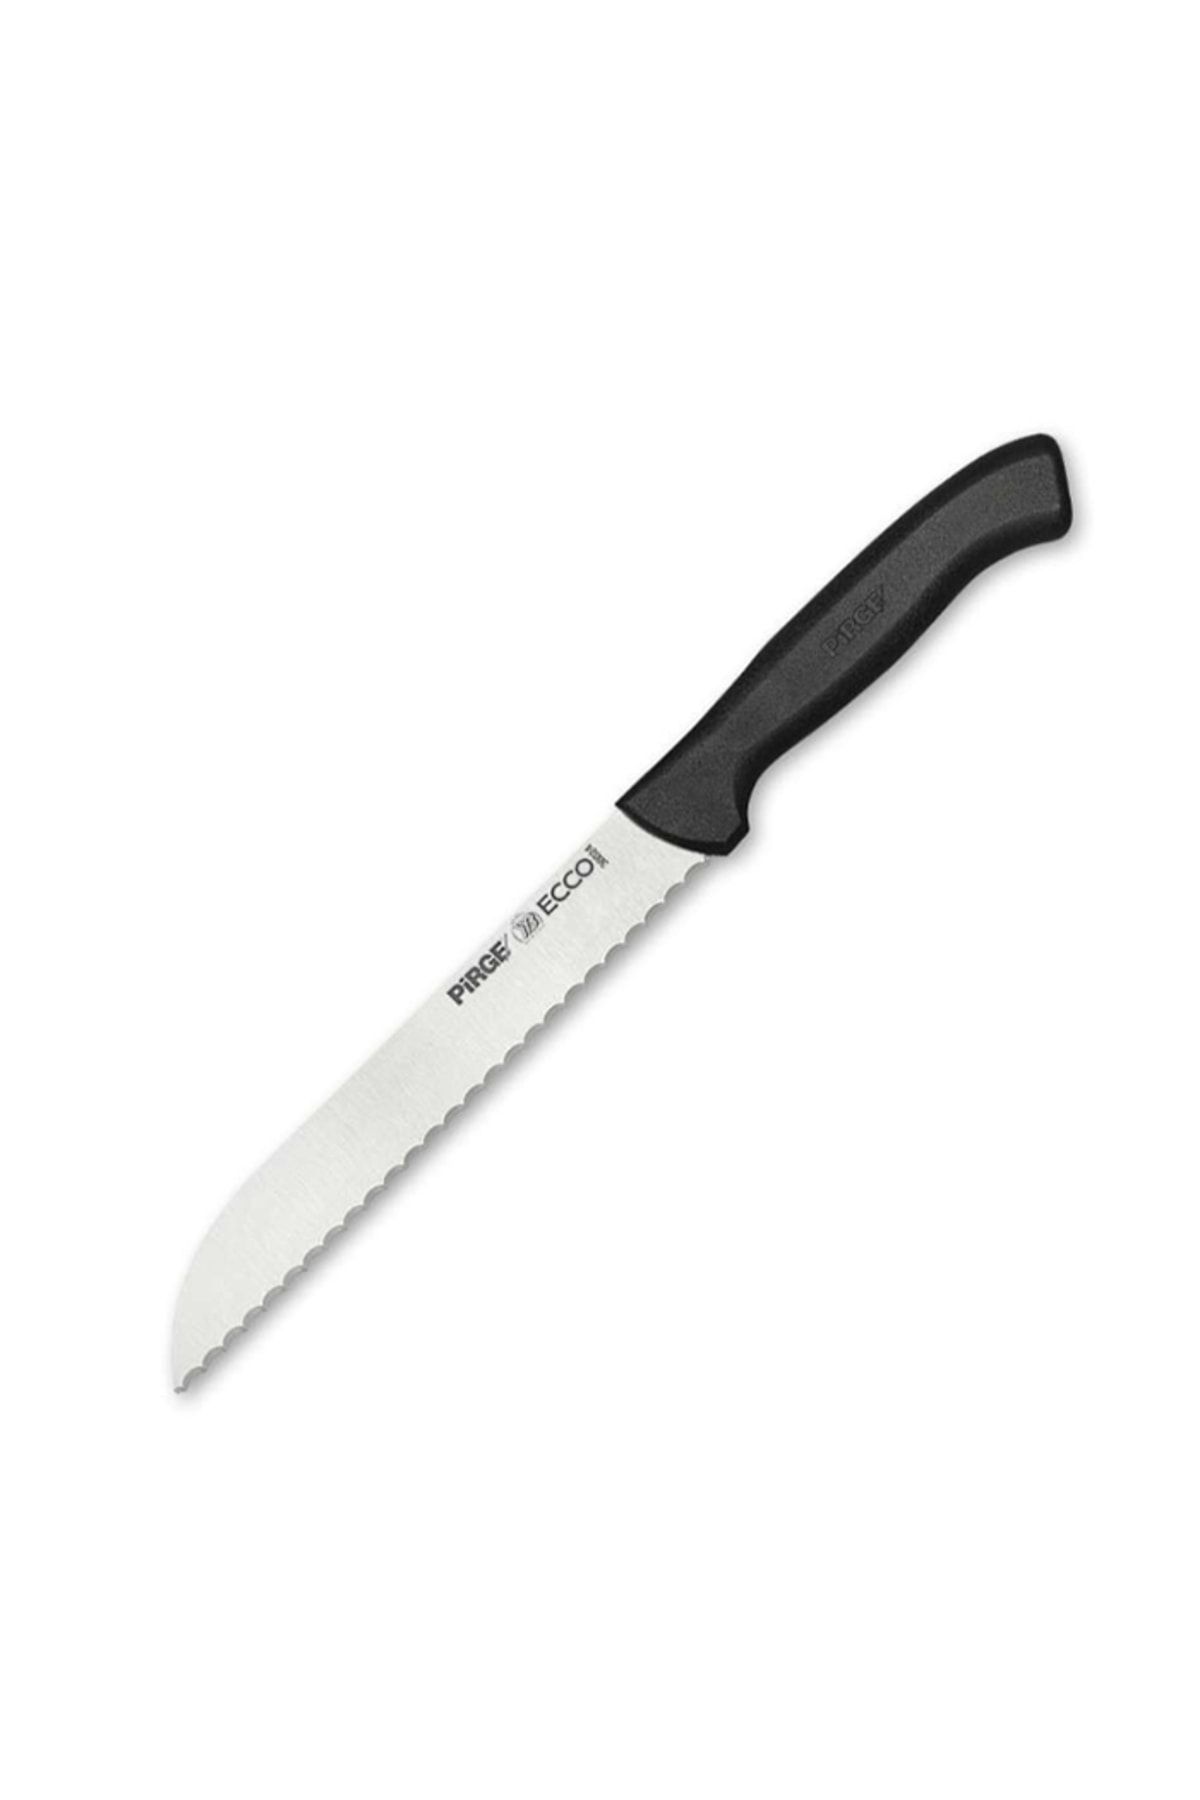 Pirge Ecco Ekmek Bıçağı Pro Dişli - Siyah / 17,5 Cm